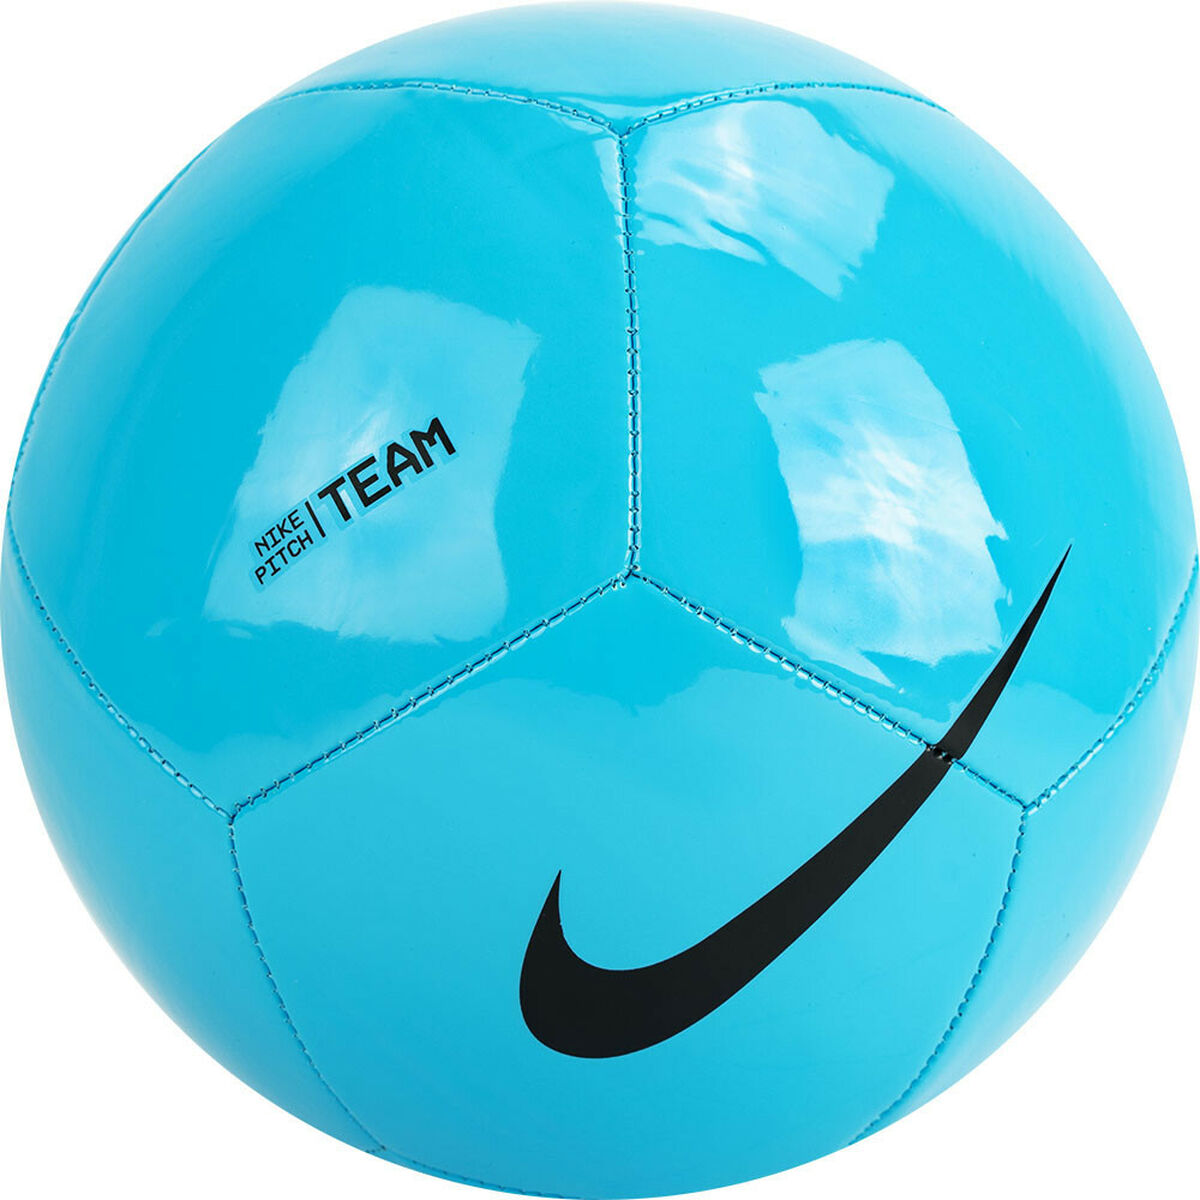 Minge de Fotbal Nike PITCH TEAM BALL DH9796 410 Albastru Sintetic (5)